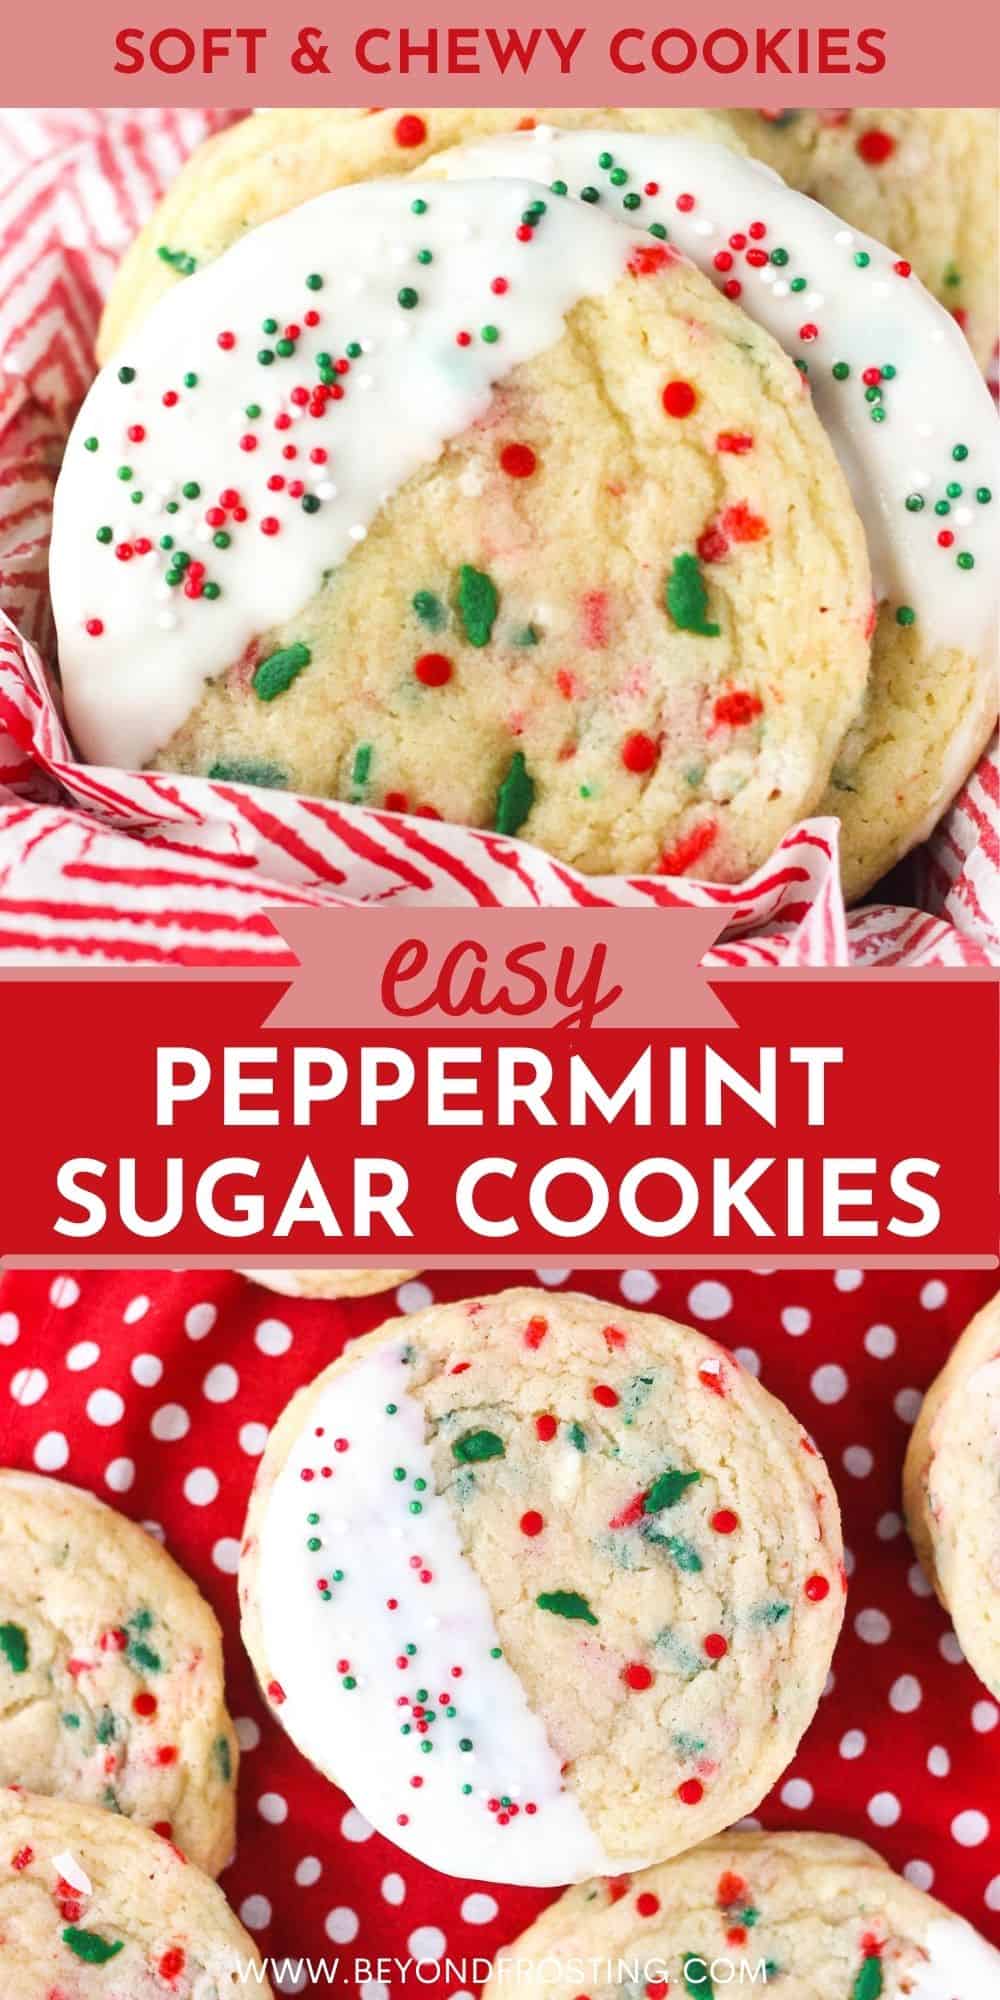 Peppermint Crunch Sugar Cookies | Beyond Frosting